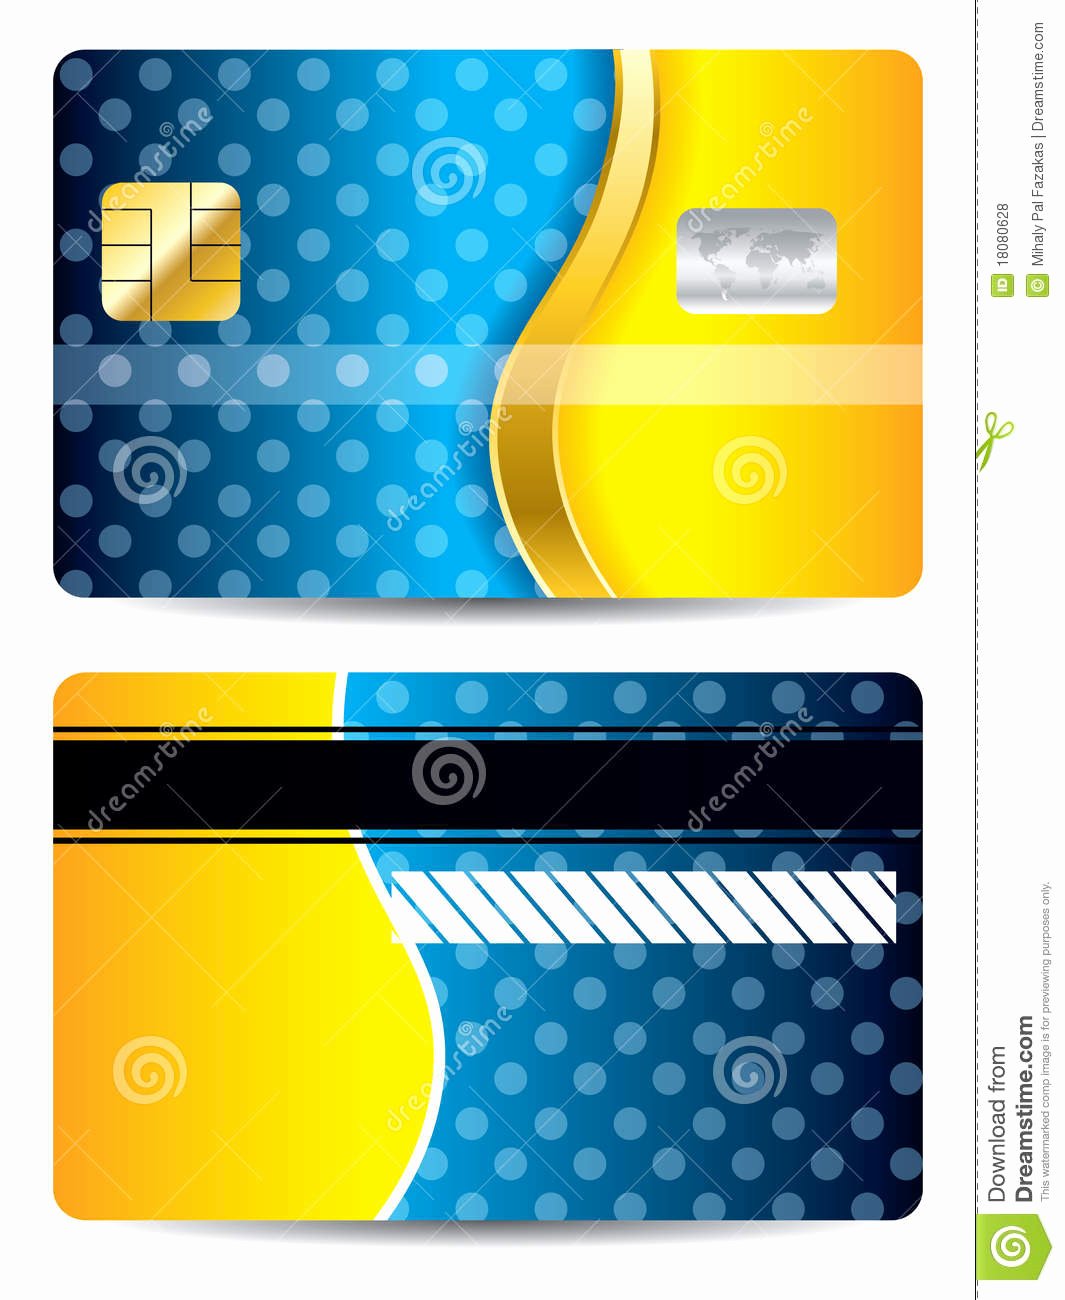 Cool Debit Card Designs Elegant Cool Blue and orange Credit Card Stock Vector